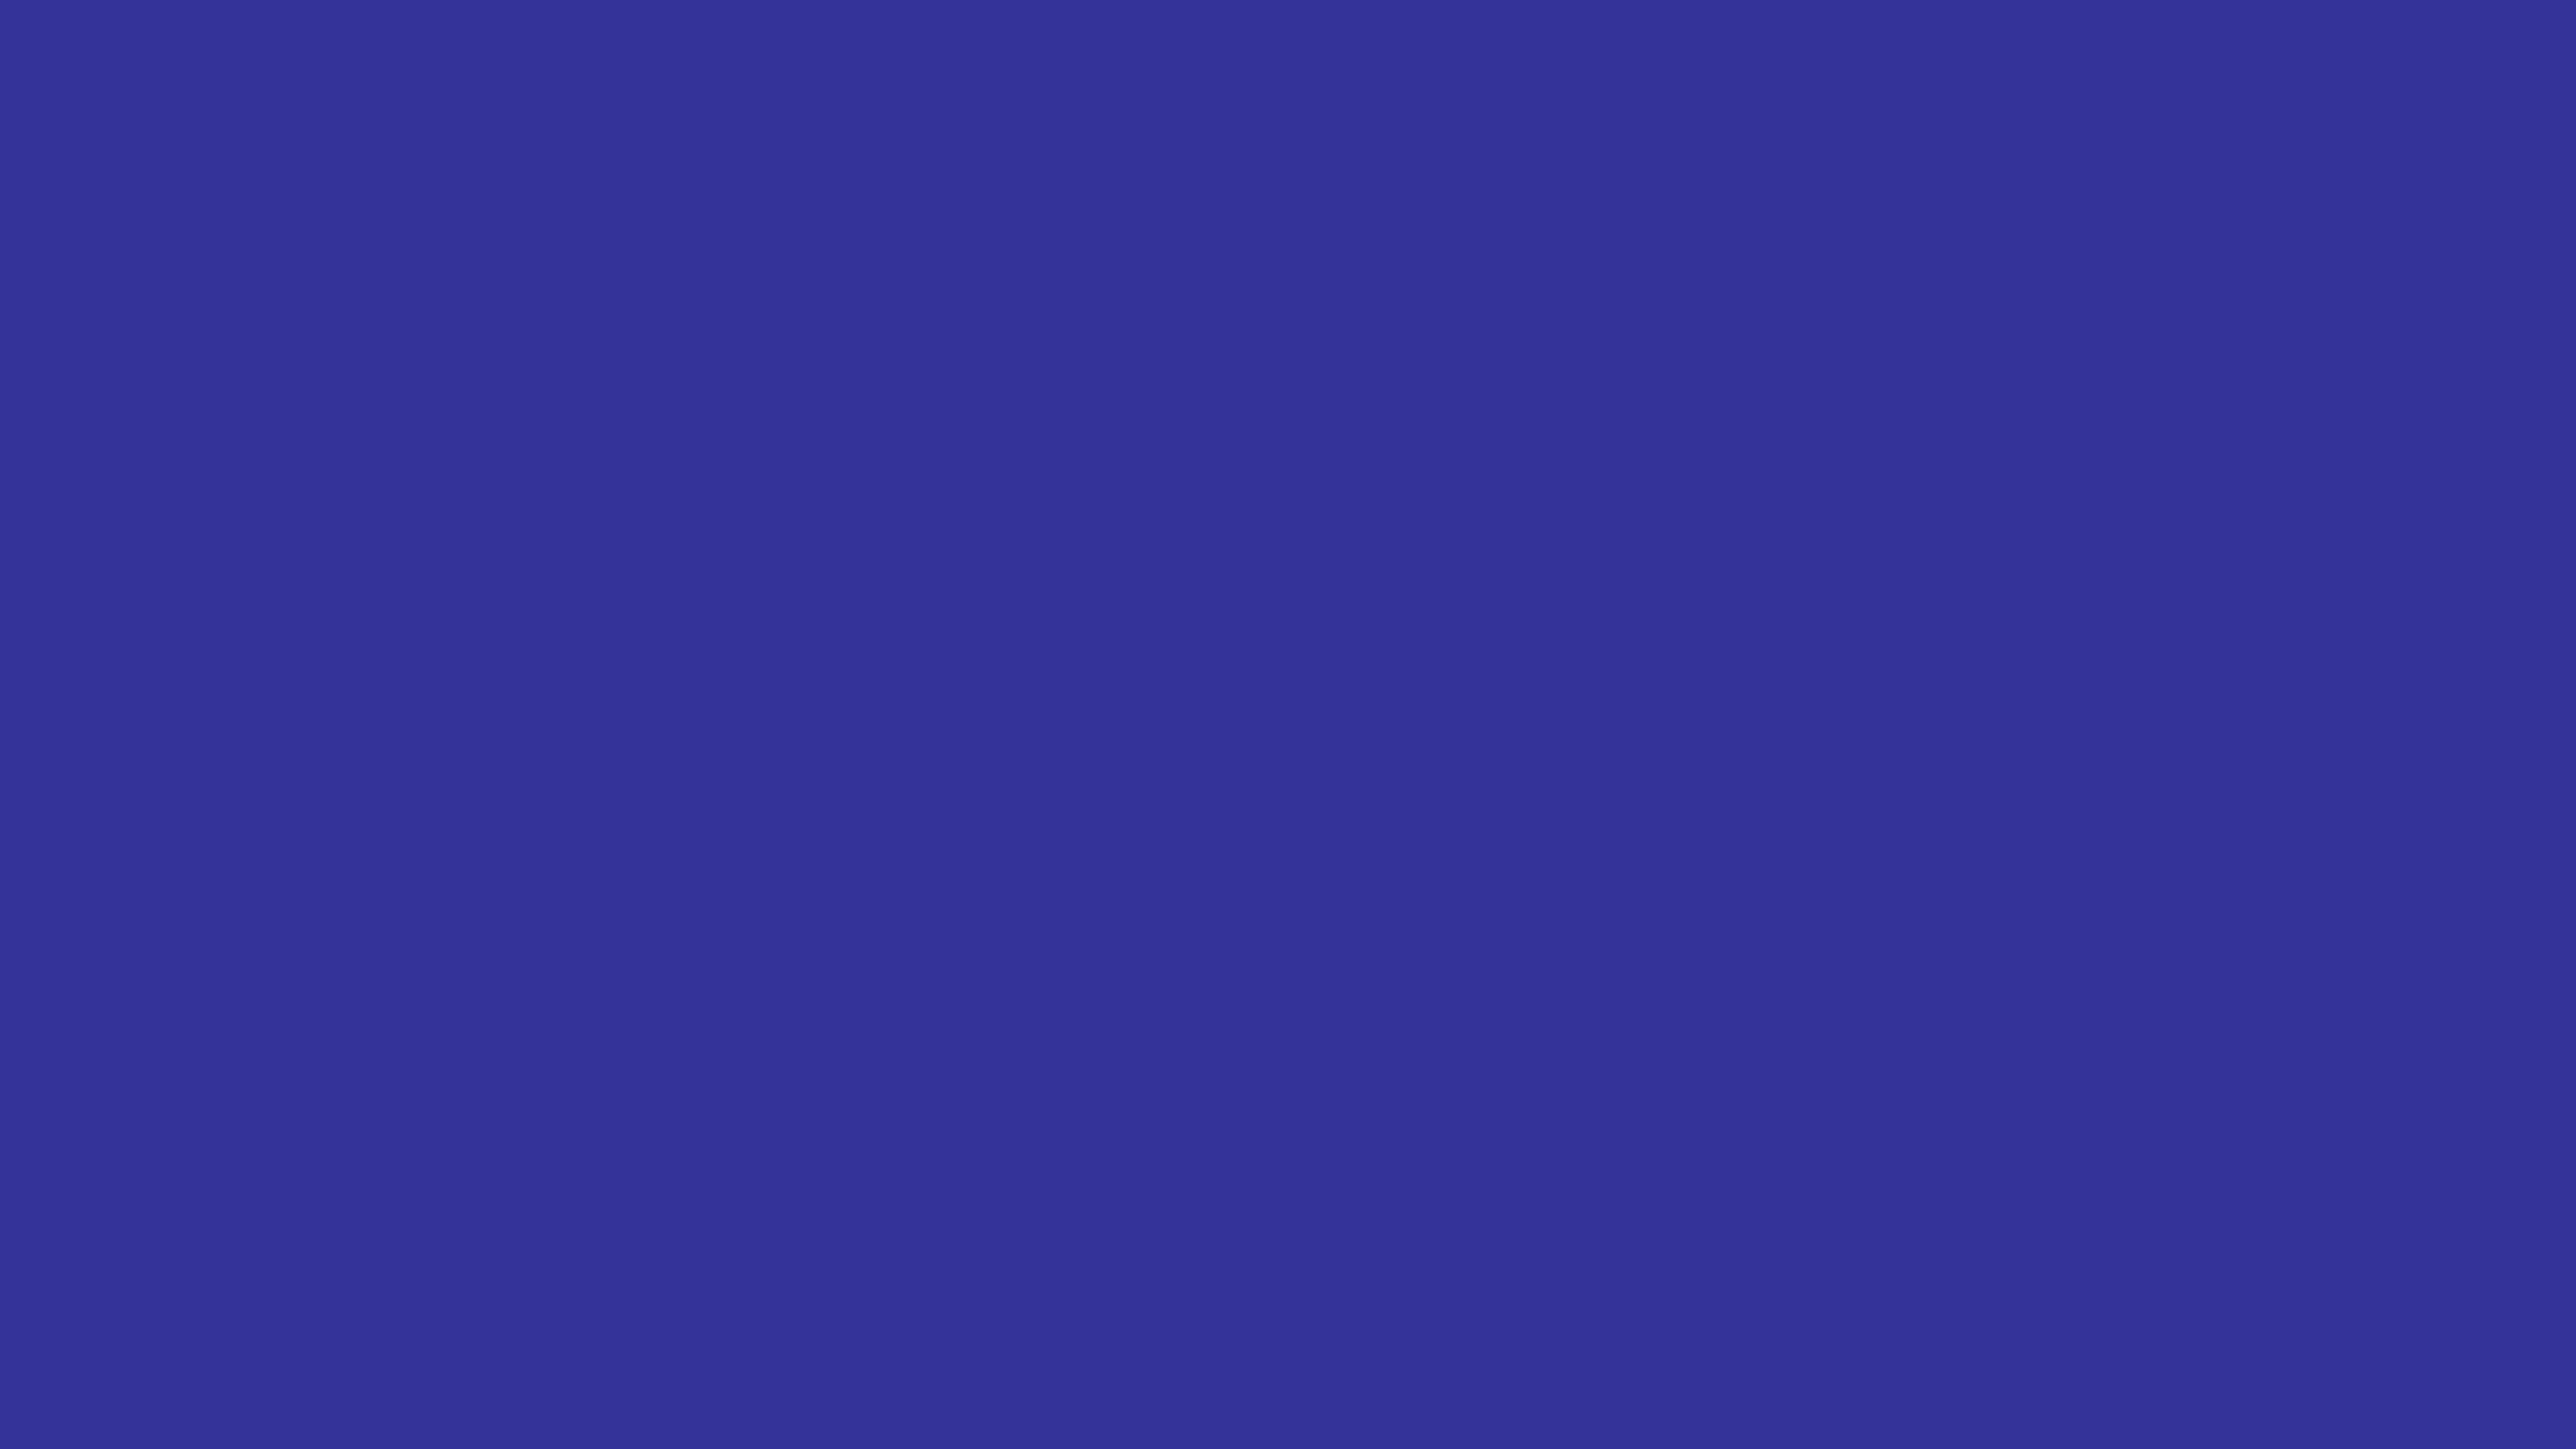 7680x4320 Blue Pigment Solid Color Background